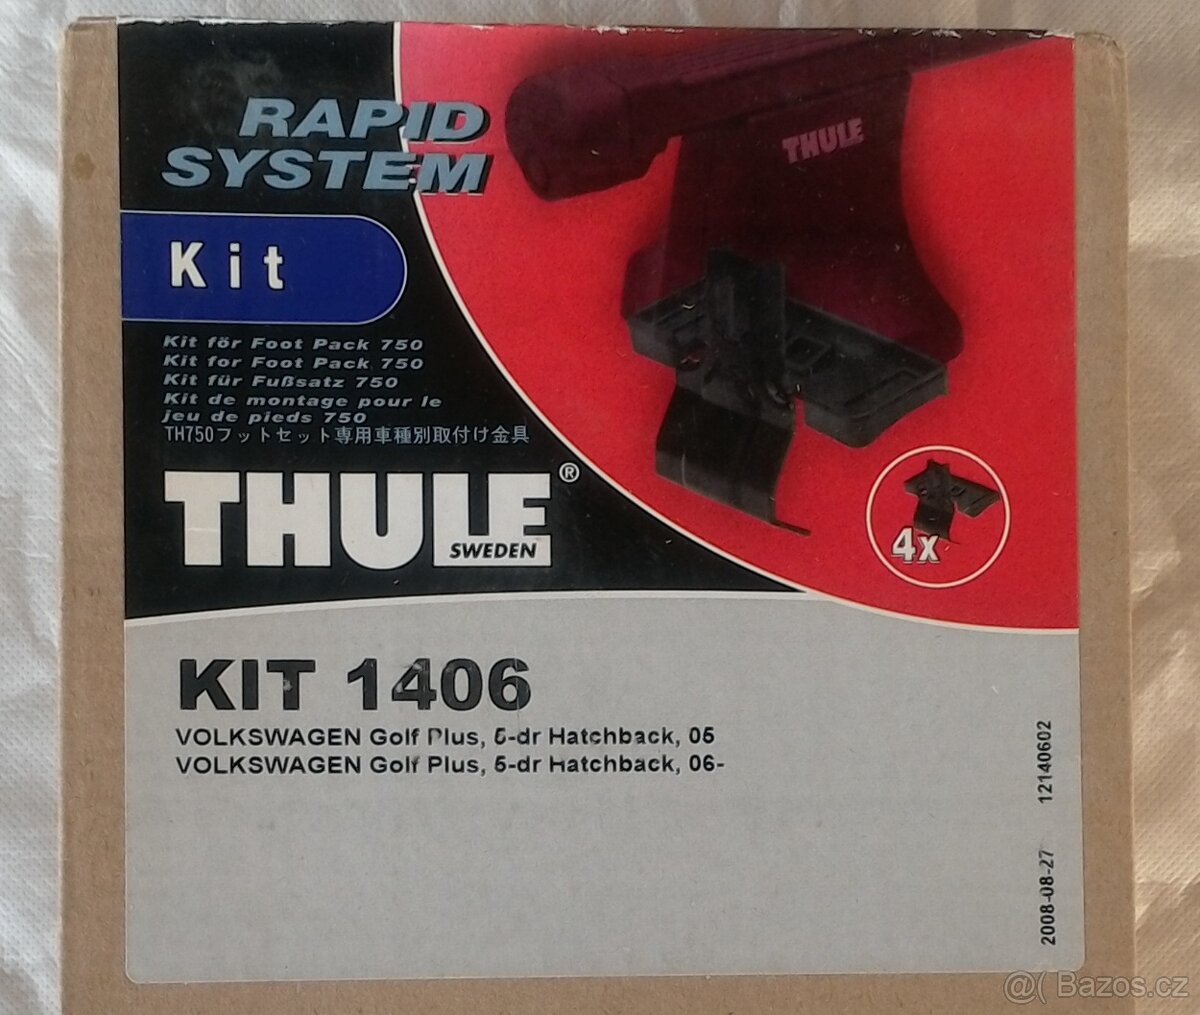 Thule kit.